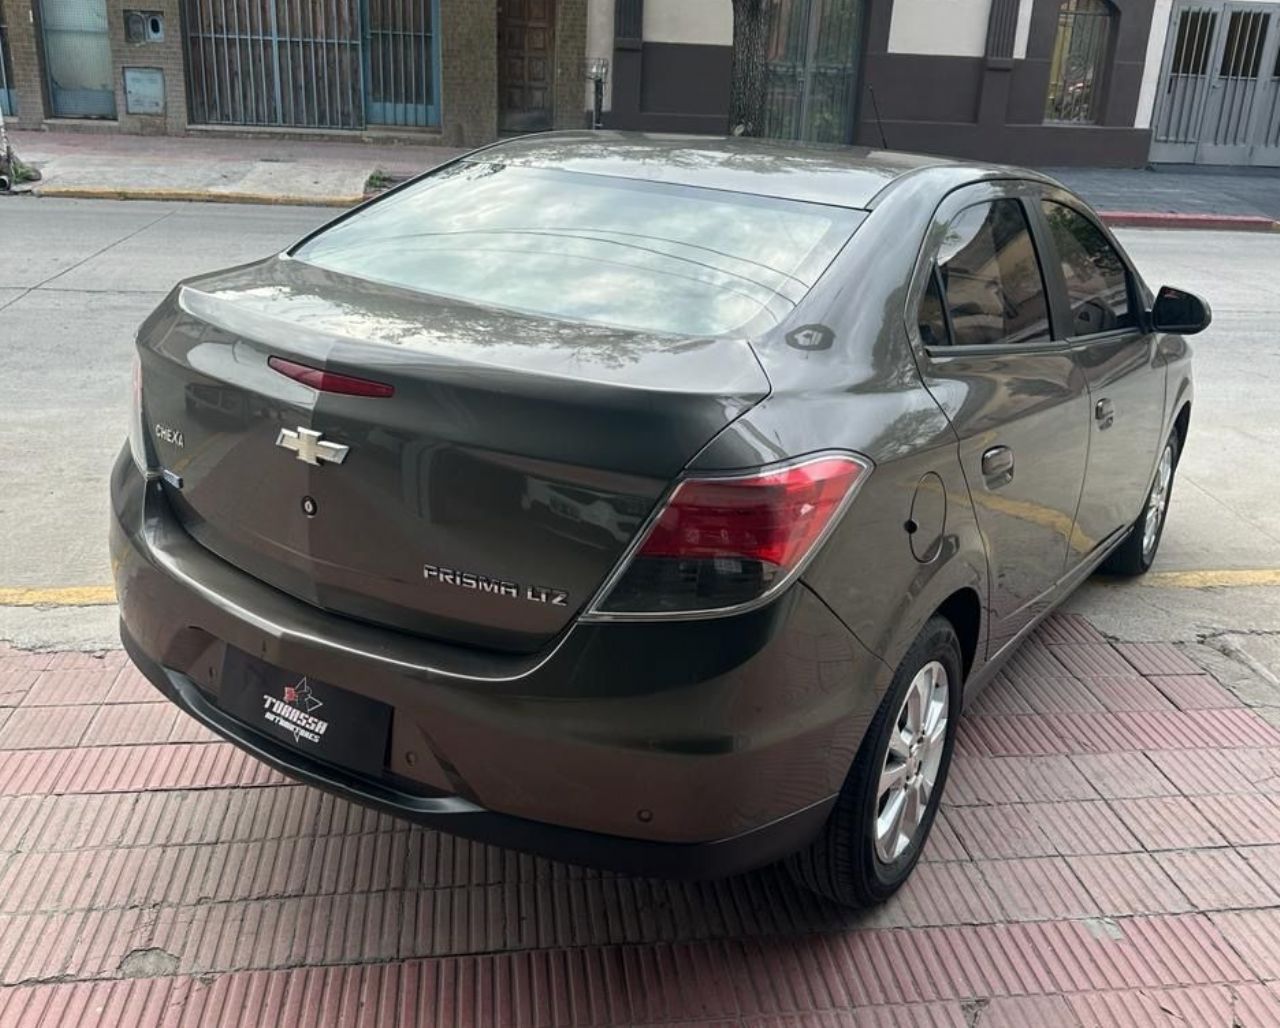 Chevrolet Prisma Usado en Córdoba, deRuedas